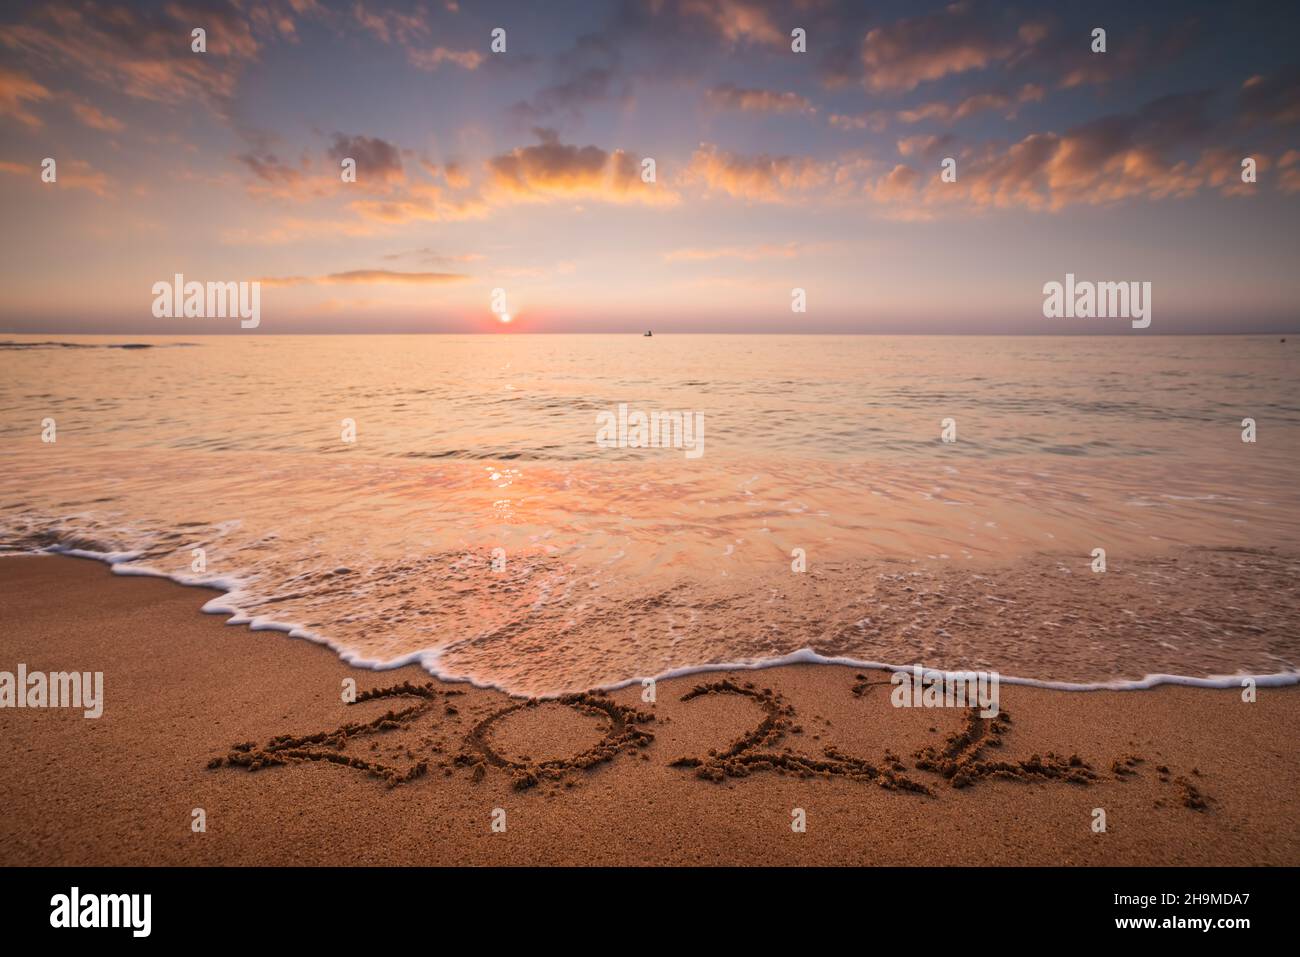 Sea sunrise over the beach. New year 2022 text on the sand Stock Photo